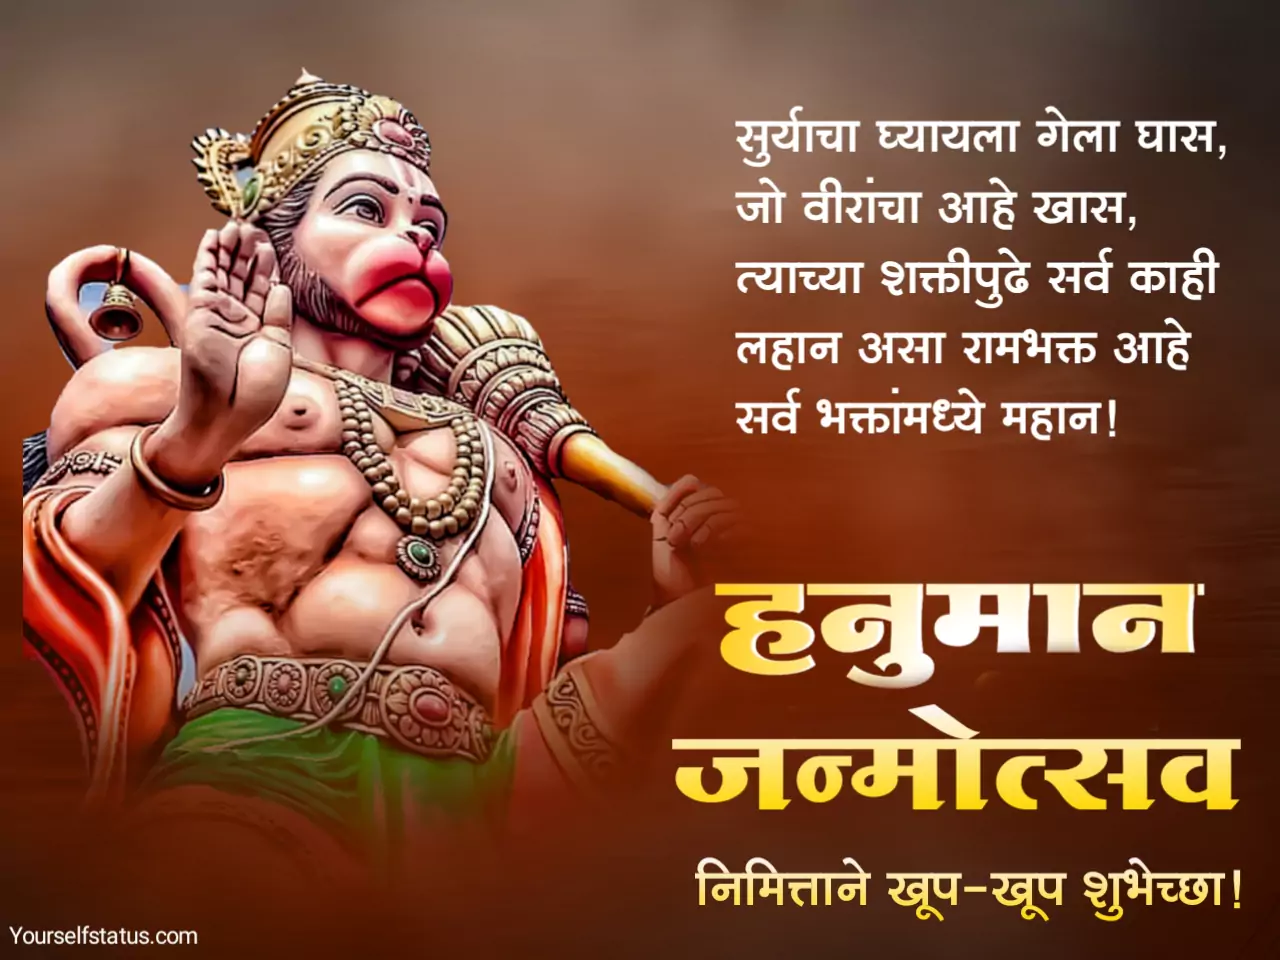 Hanuman jayanti greetings in marathi